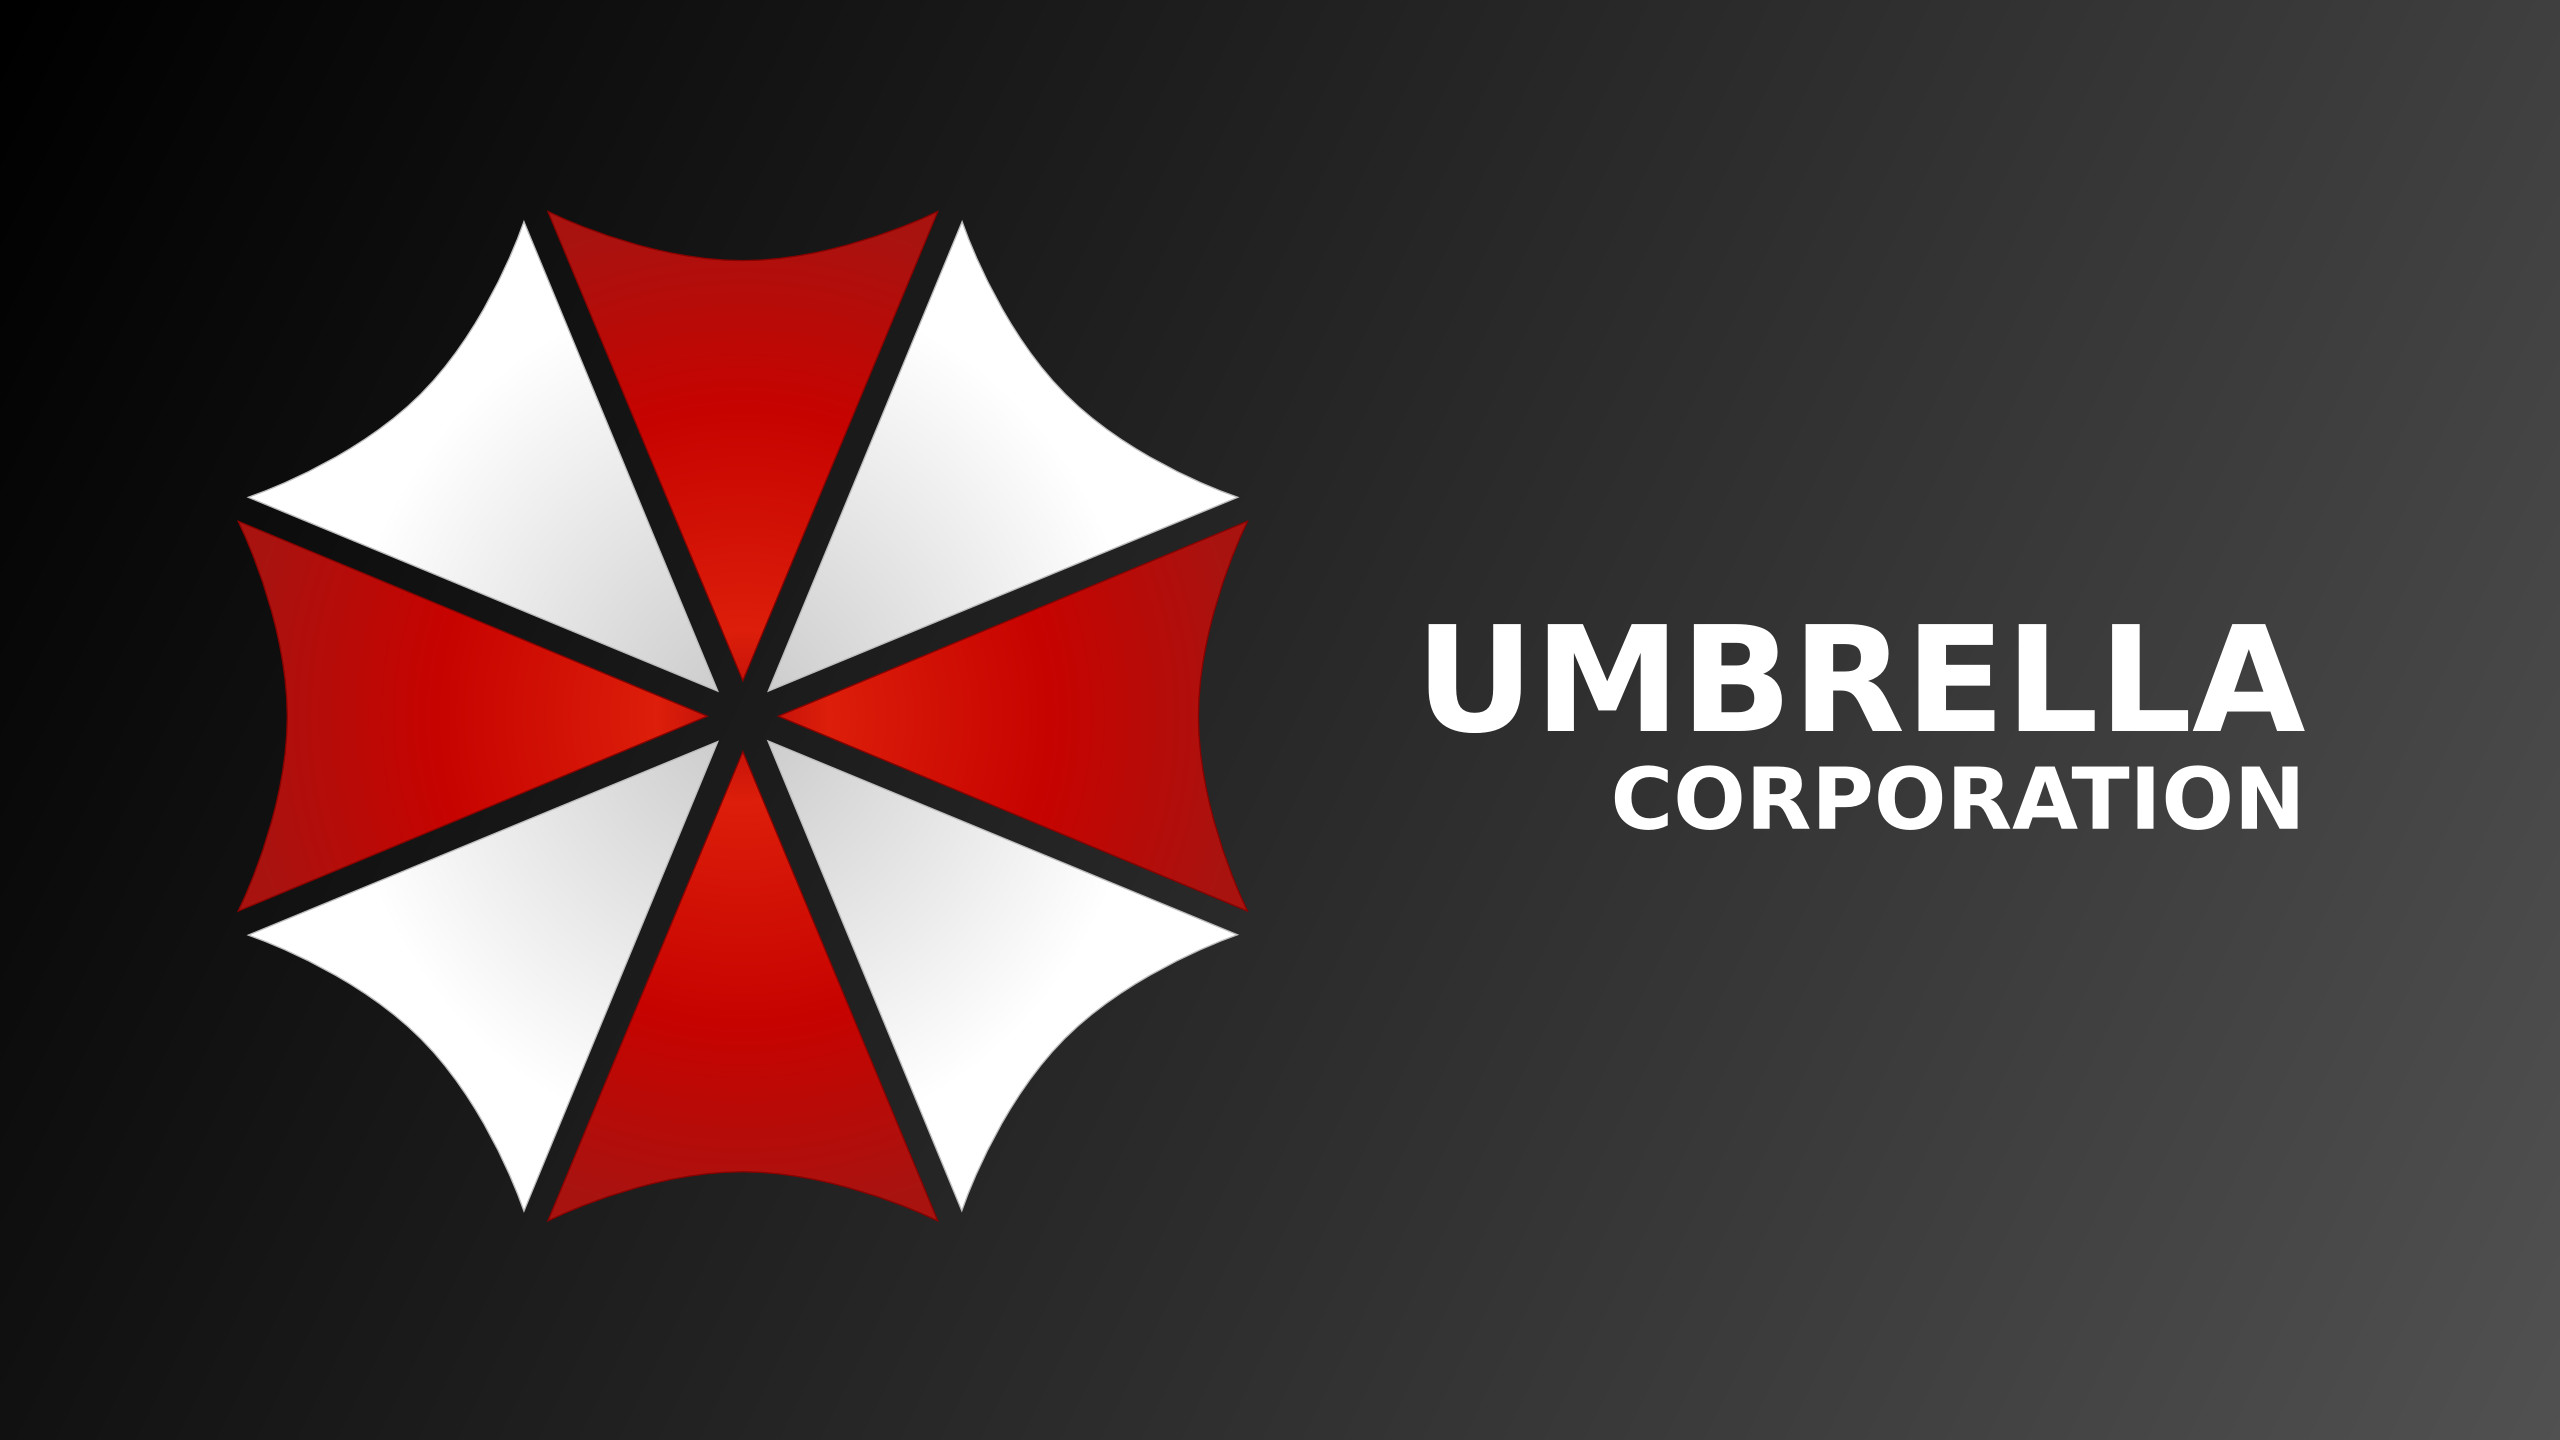 Logo corporation. Обитель зла Амбрелла. Эмблема Амбрелла. Символ корпорации Амбрелла. Корпорация Umbrella логотип.